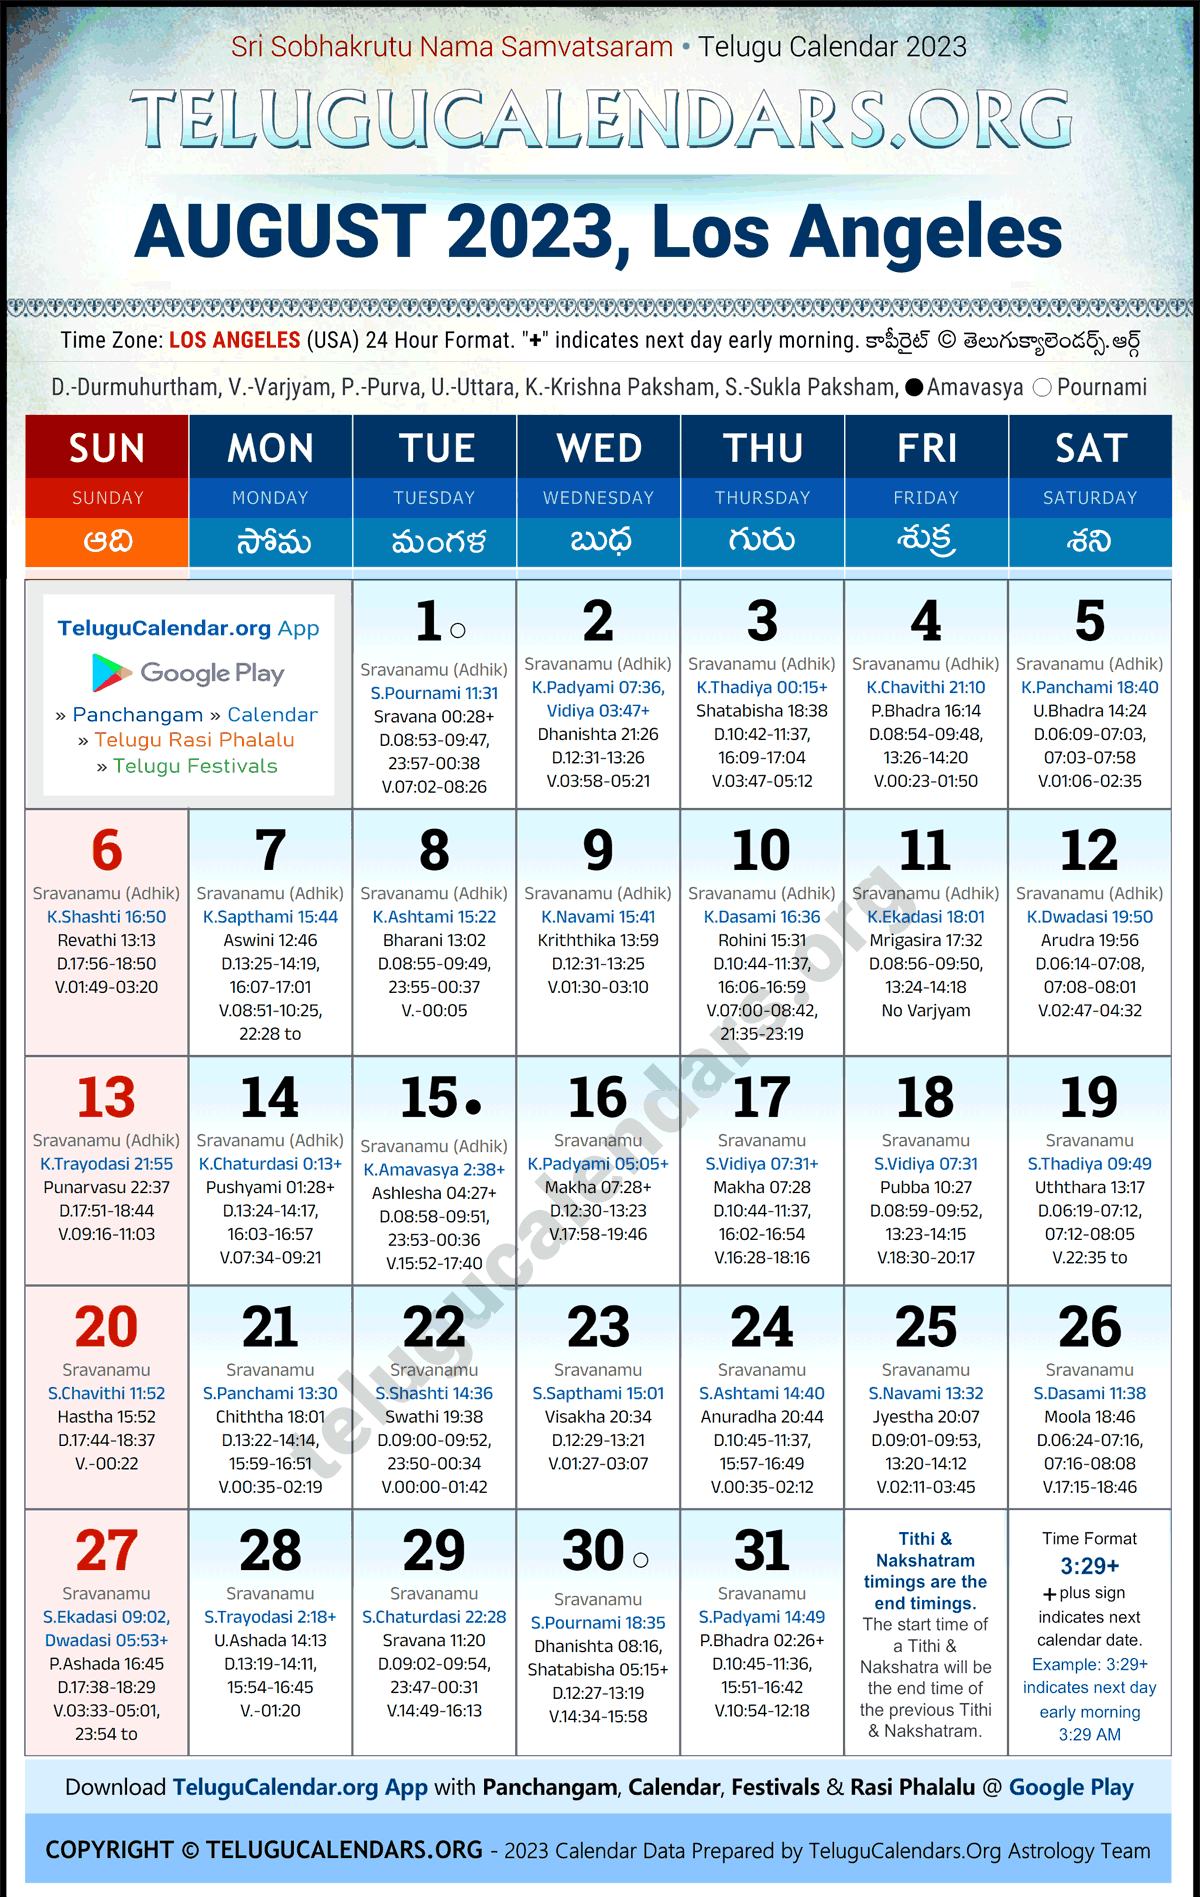 Telugu Calendar 2023 August Festivals for Los Angeles